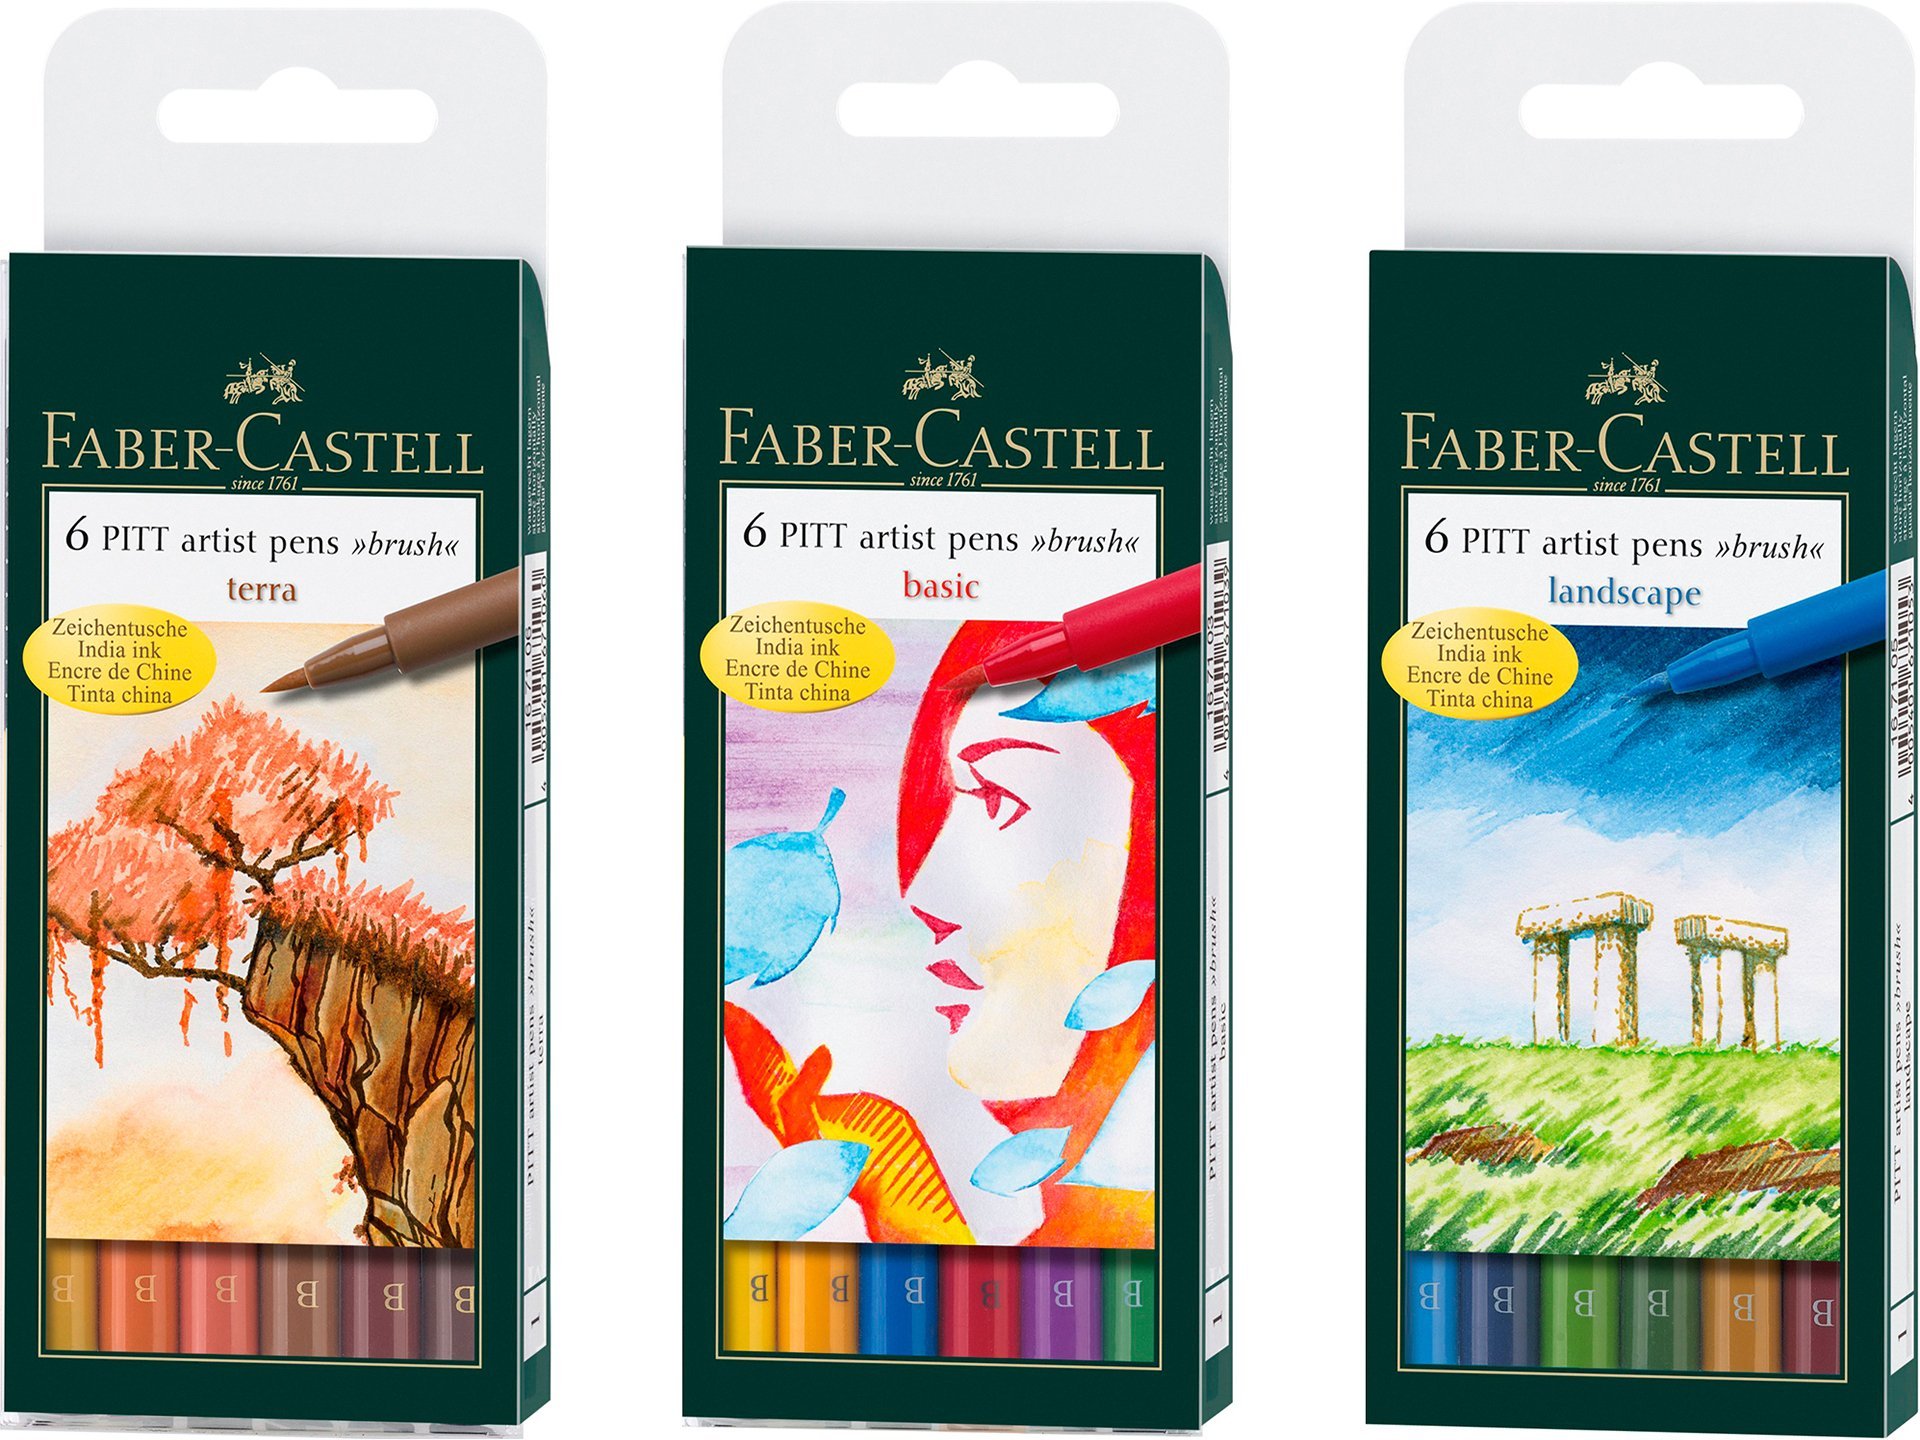 Regulatie Frustratie Vertrappen Buy Faber-Castell Pitt artist pen, brush, coloured online at Modulor